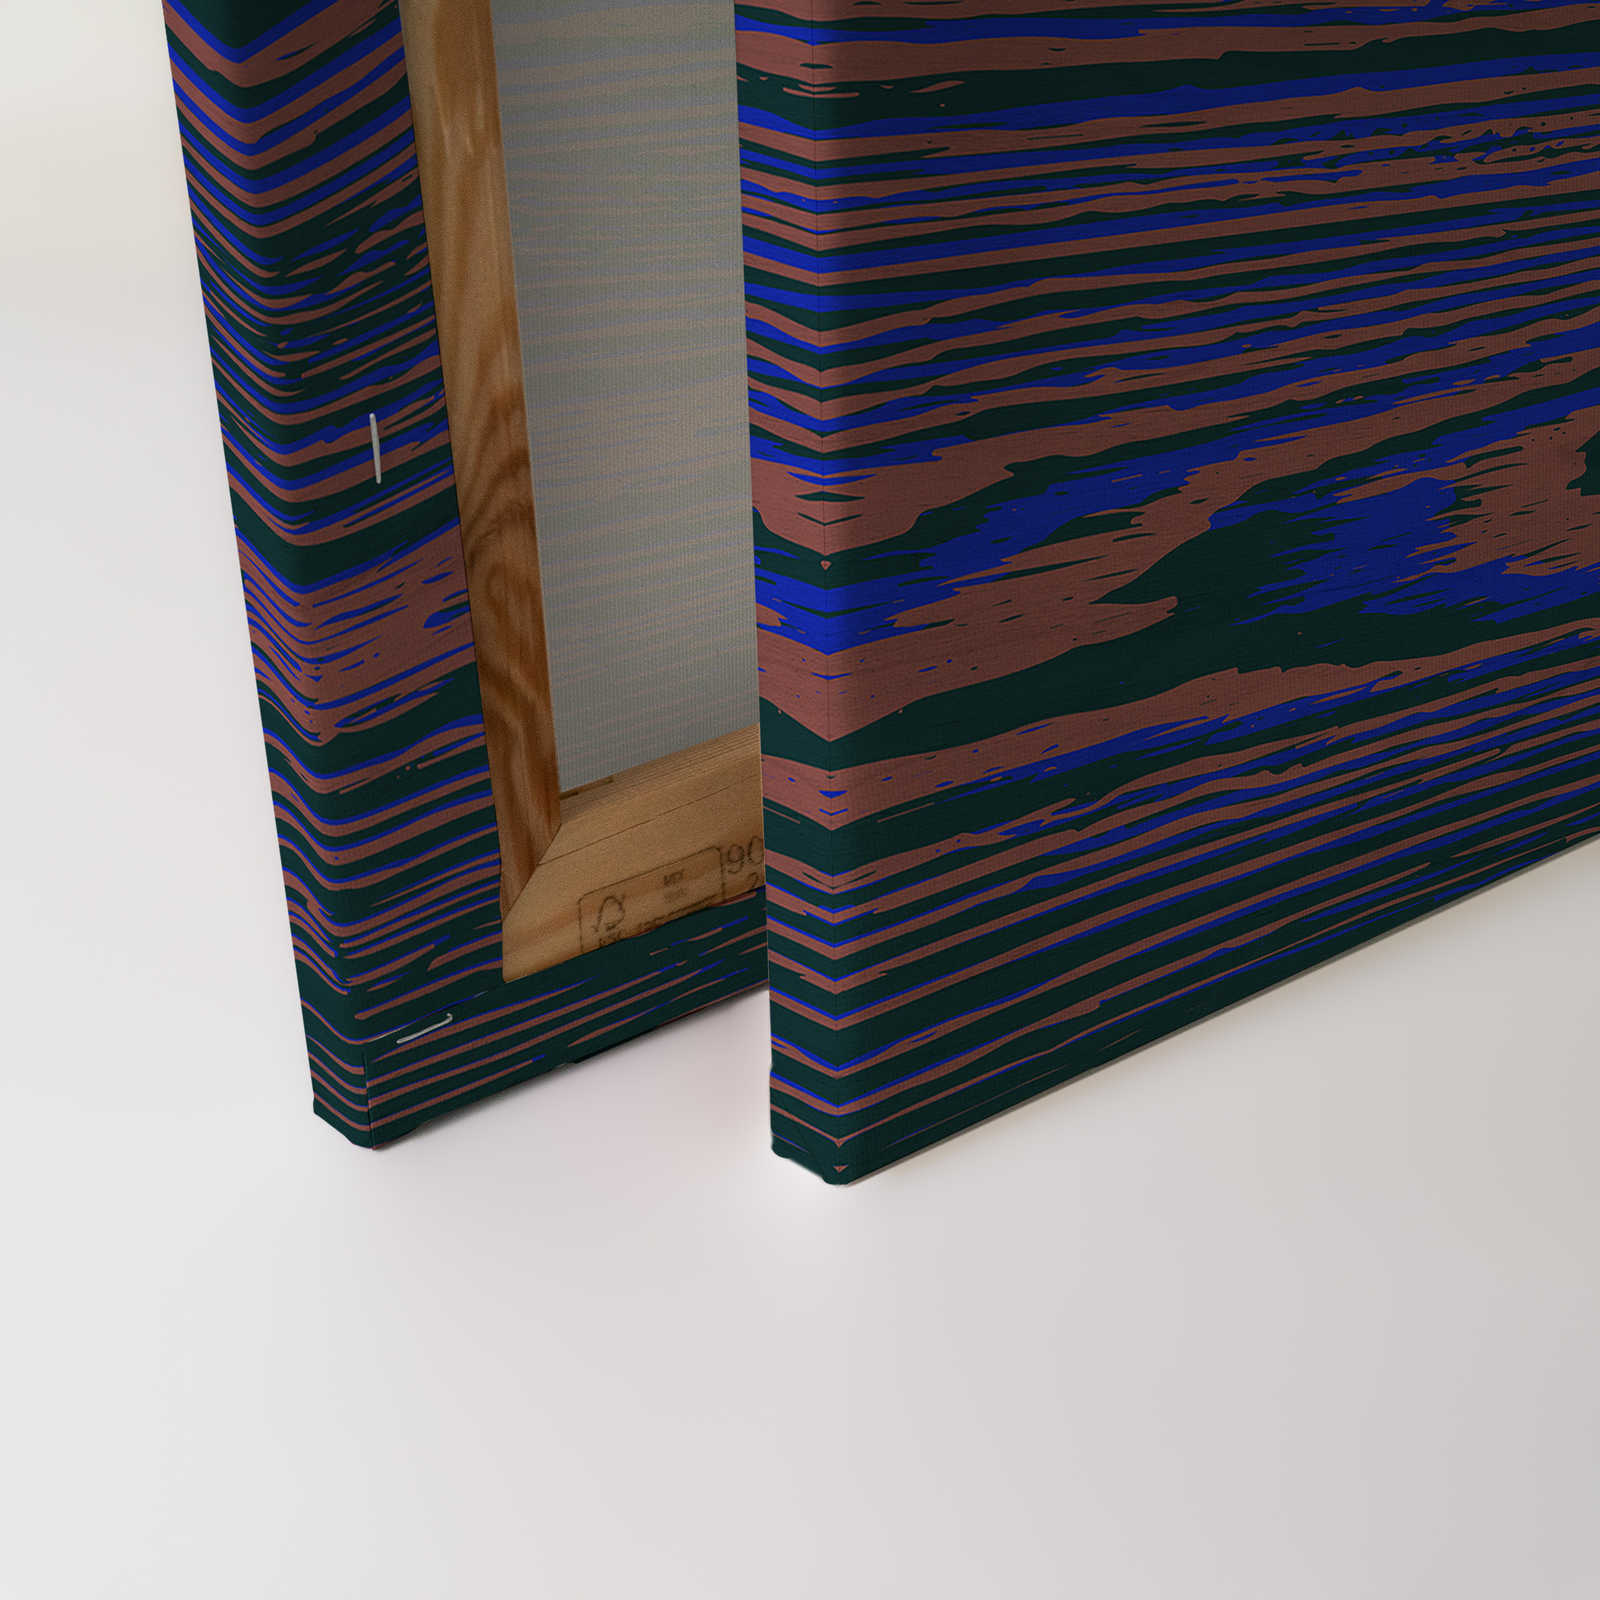             Kontiki 3 - Canvas painting Neon Wood Grain, Purple & Black - 1.20 m x 0.80 m
        